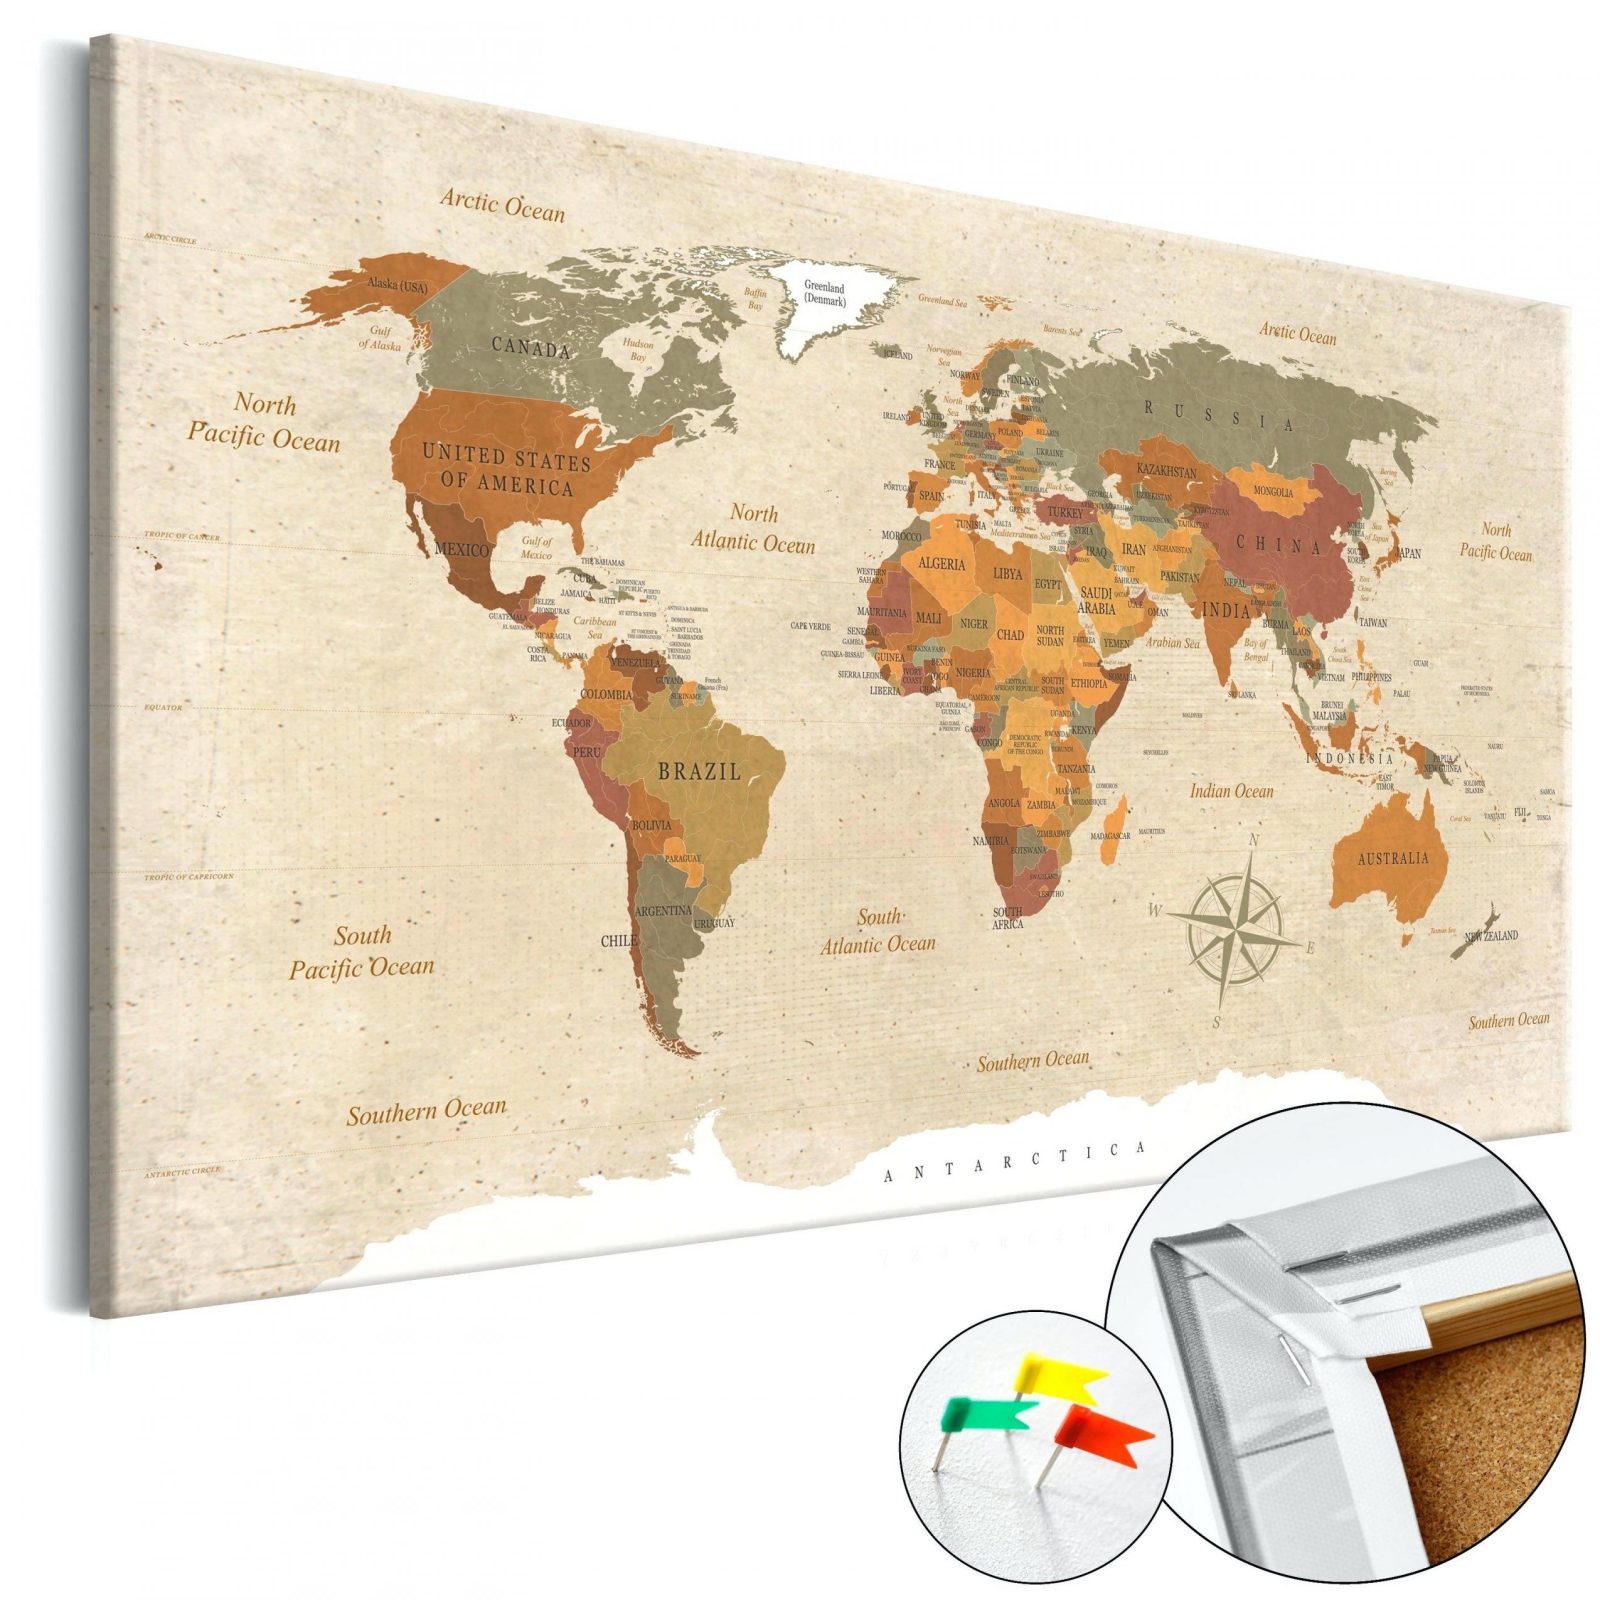 Kork Pinnwand Weltkarte Wandbilder Landkarte Leinwand Bilder Xxl von Weltkarte Pinnwand Selber Machen Bild